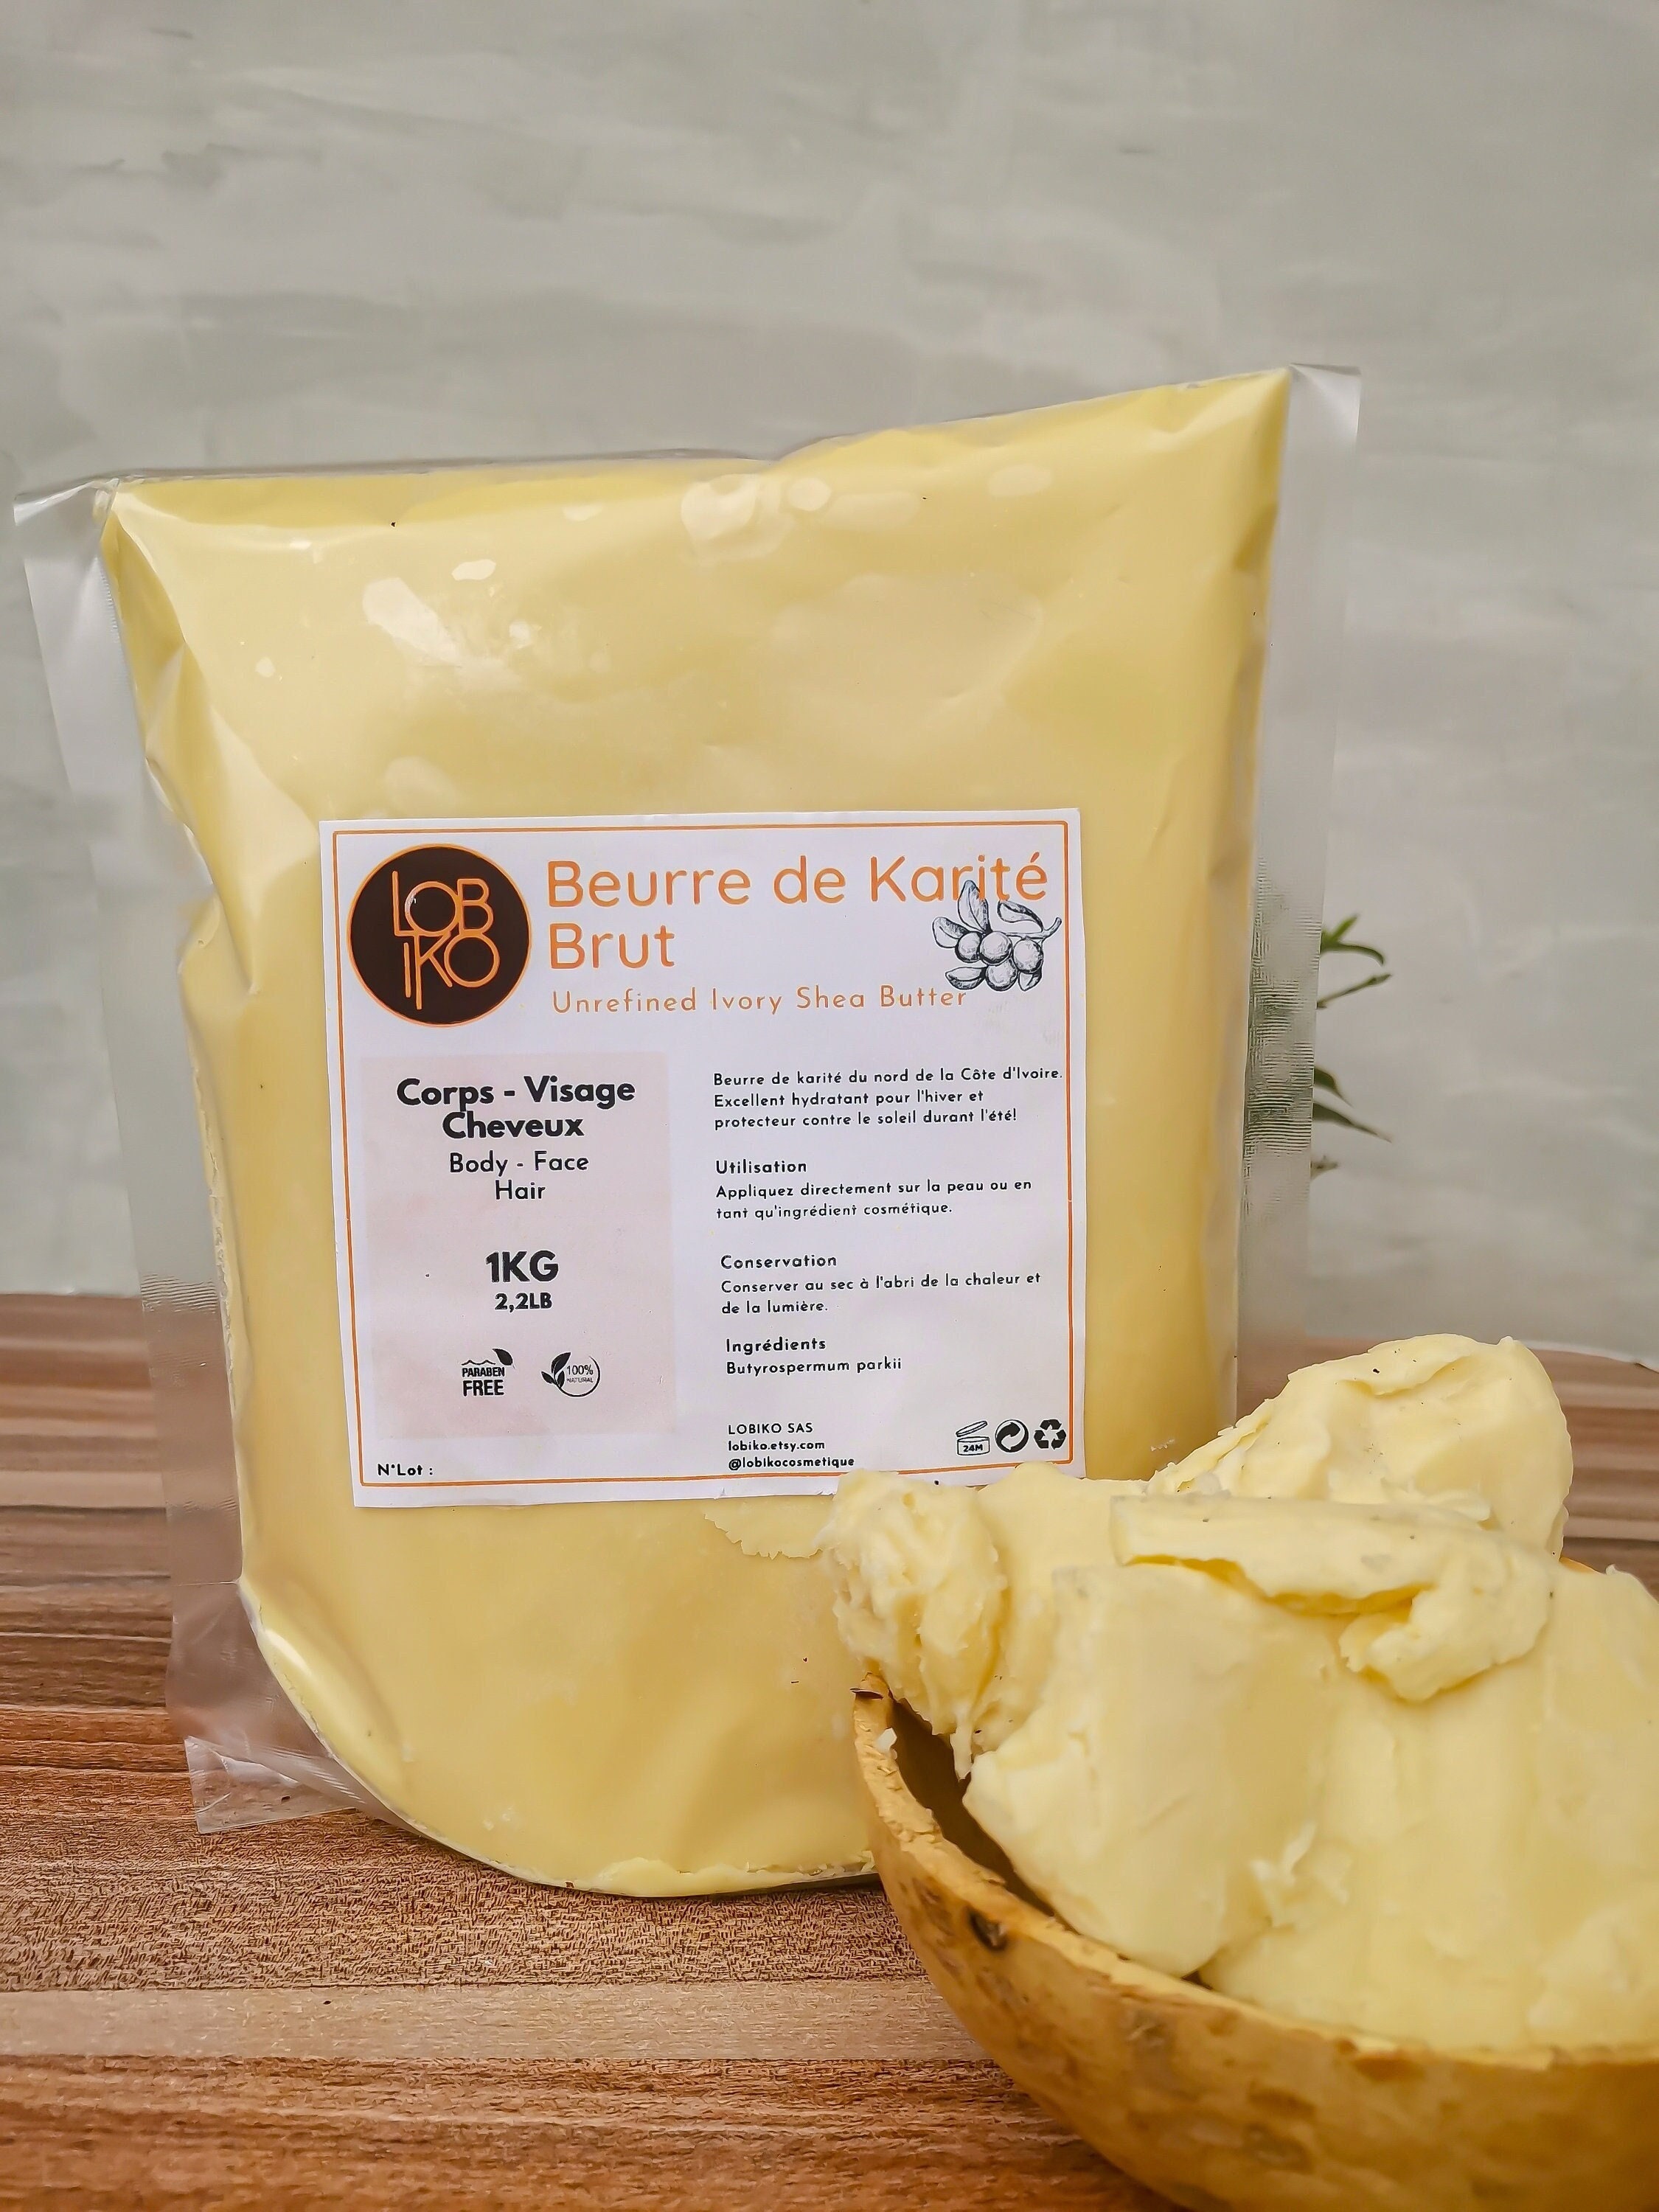 1kg Beurre de karité brut, cru, pur non raffiné 100% naturel Raw african  ivoiry shea butter -  France